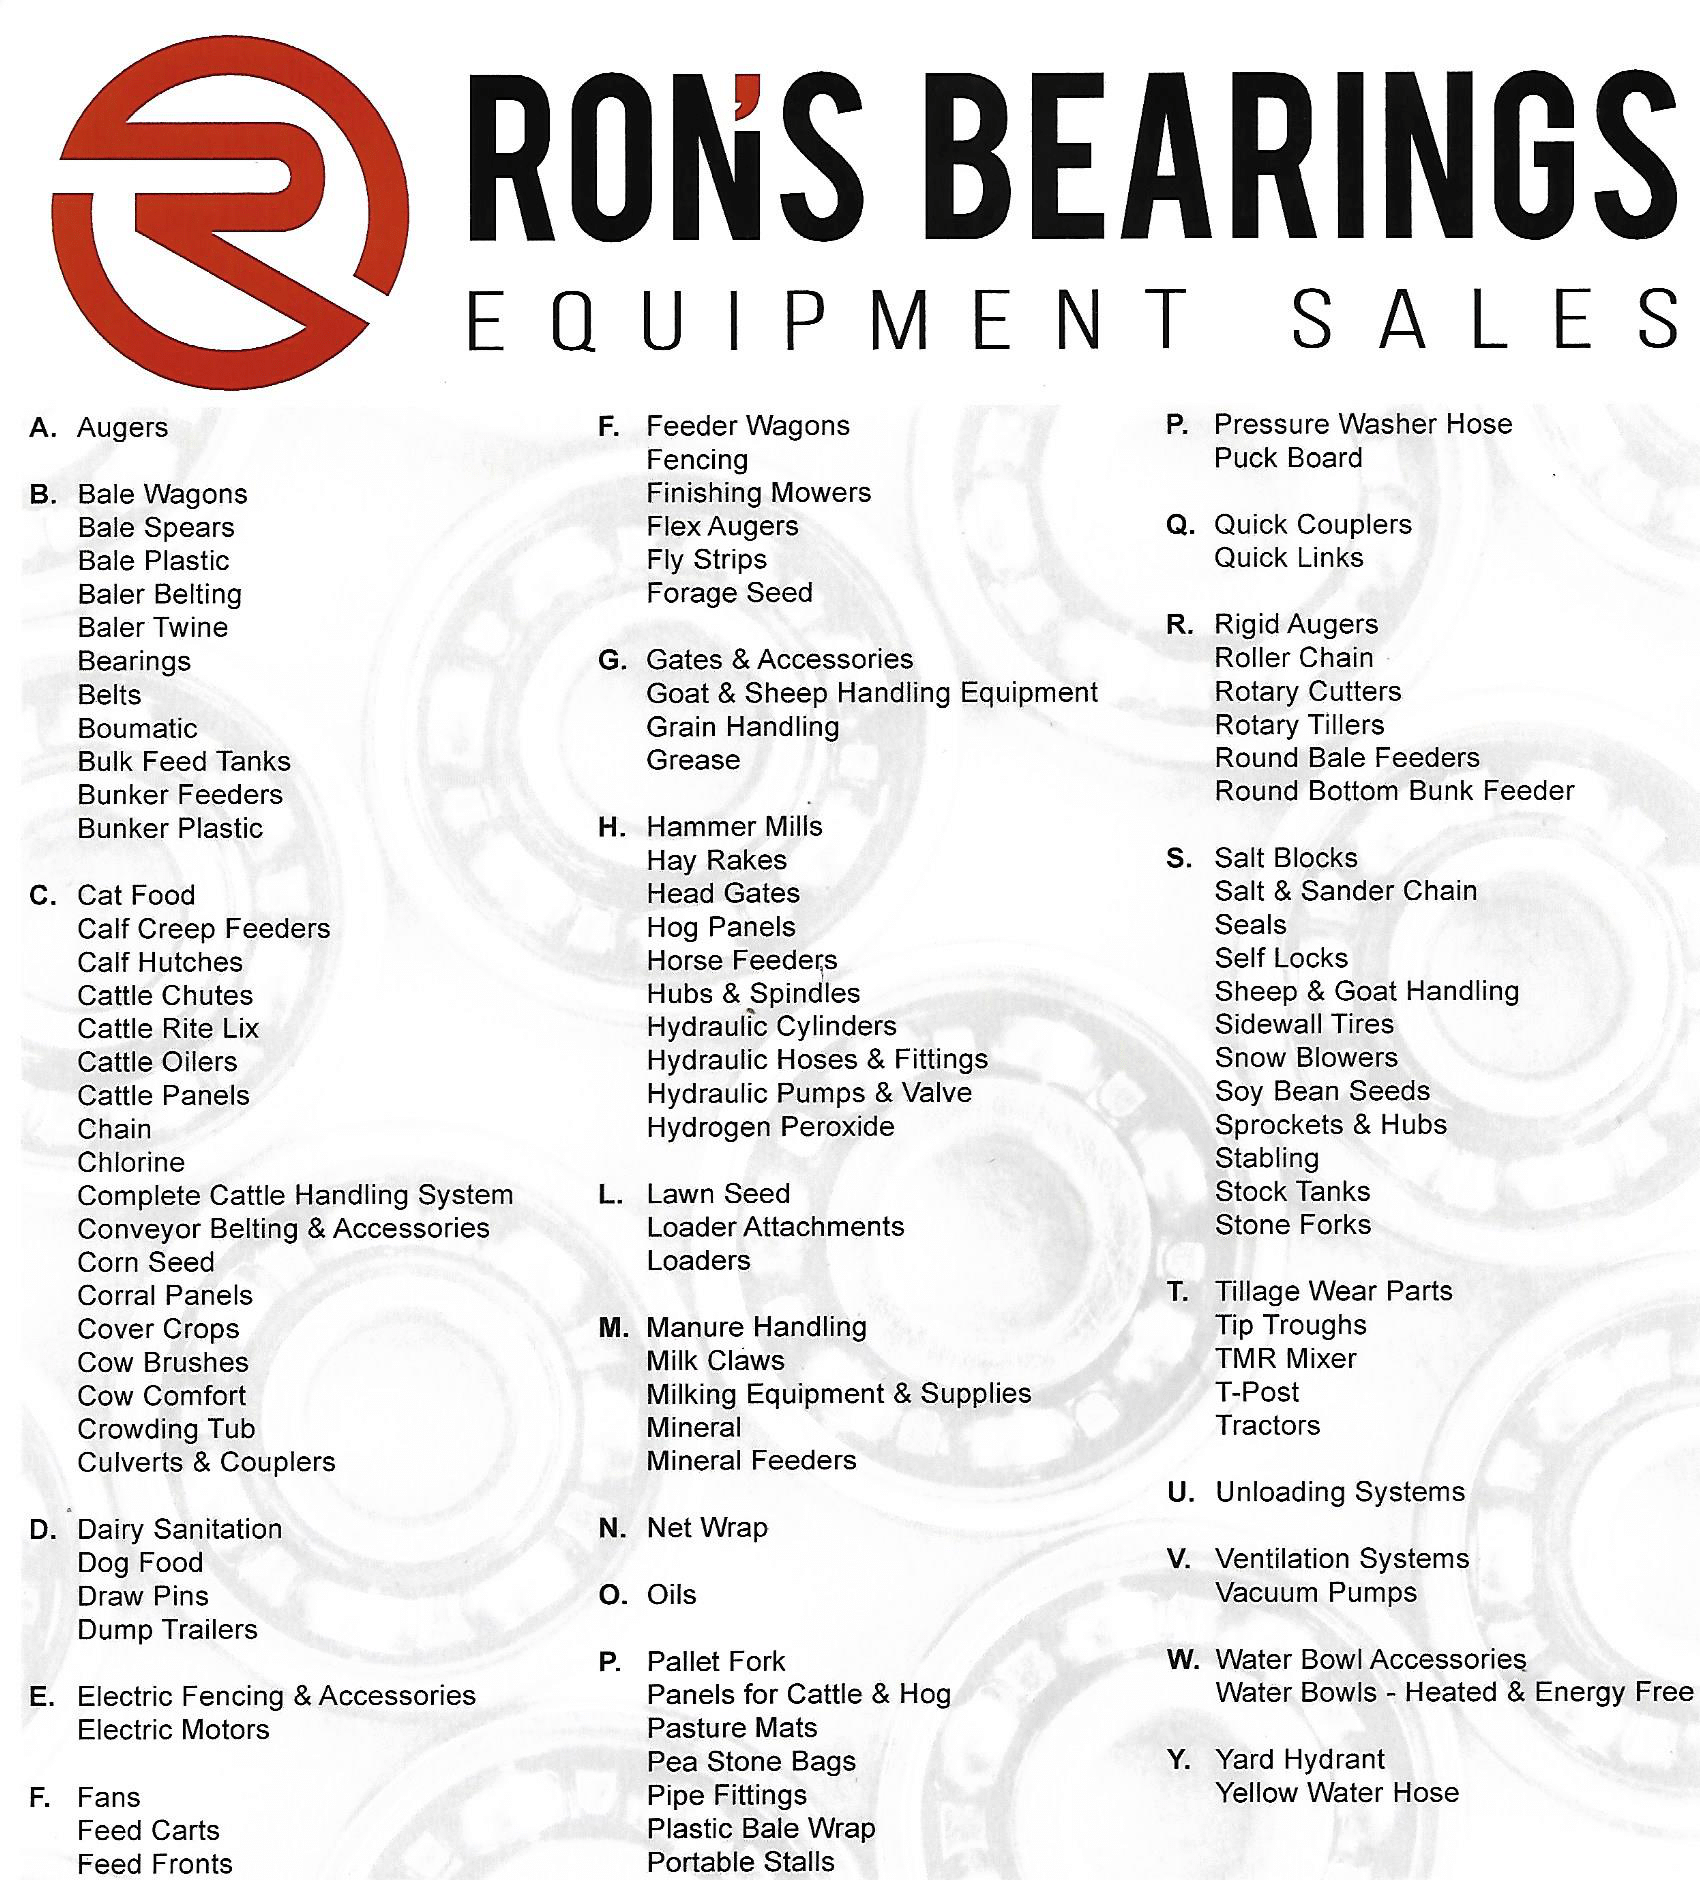 Ron’s Bearings Equipment Sales